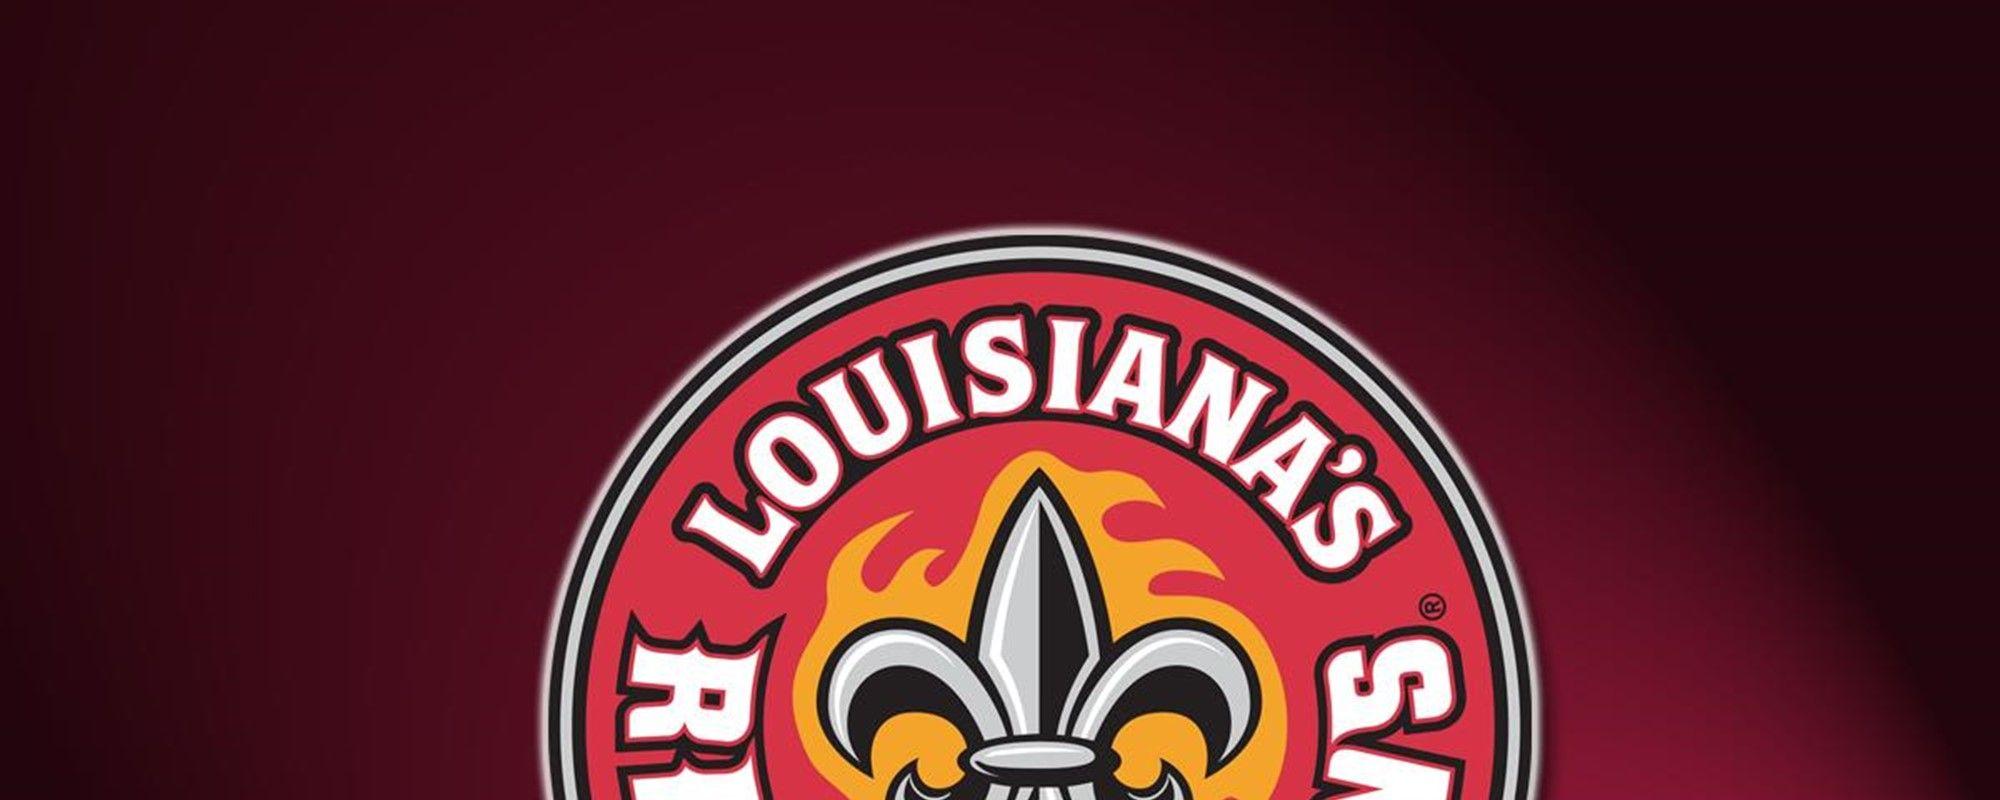 Cajundome Logo - Cajundome Box Office to Extend Hours - Louisiana Athletics